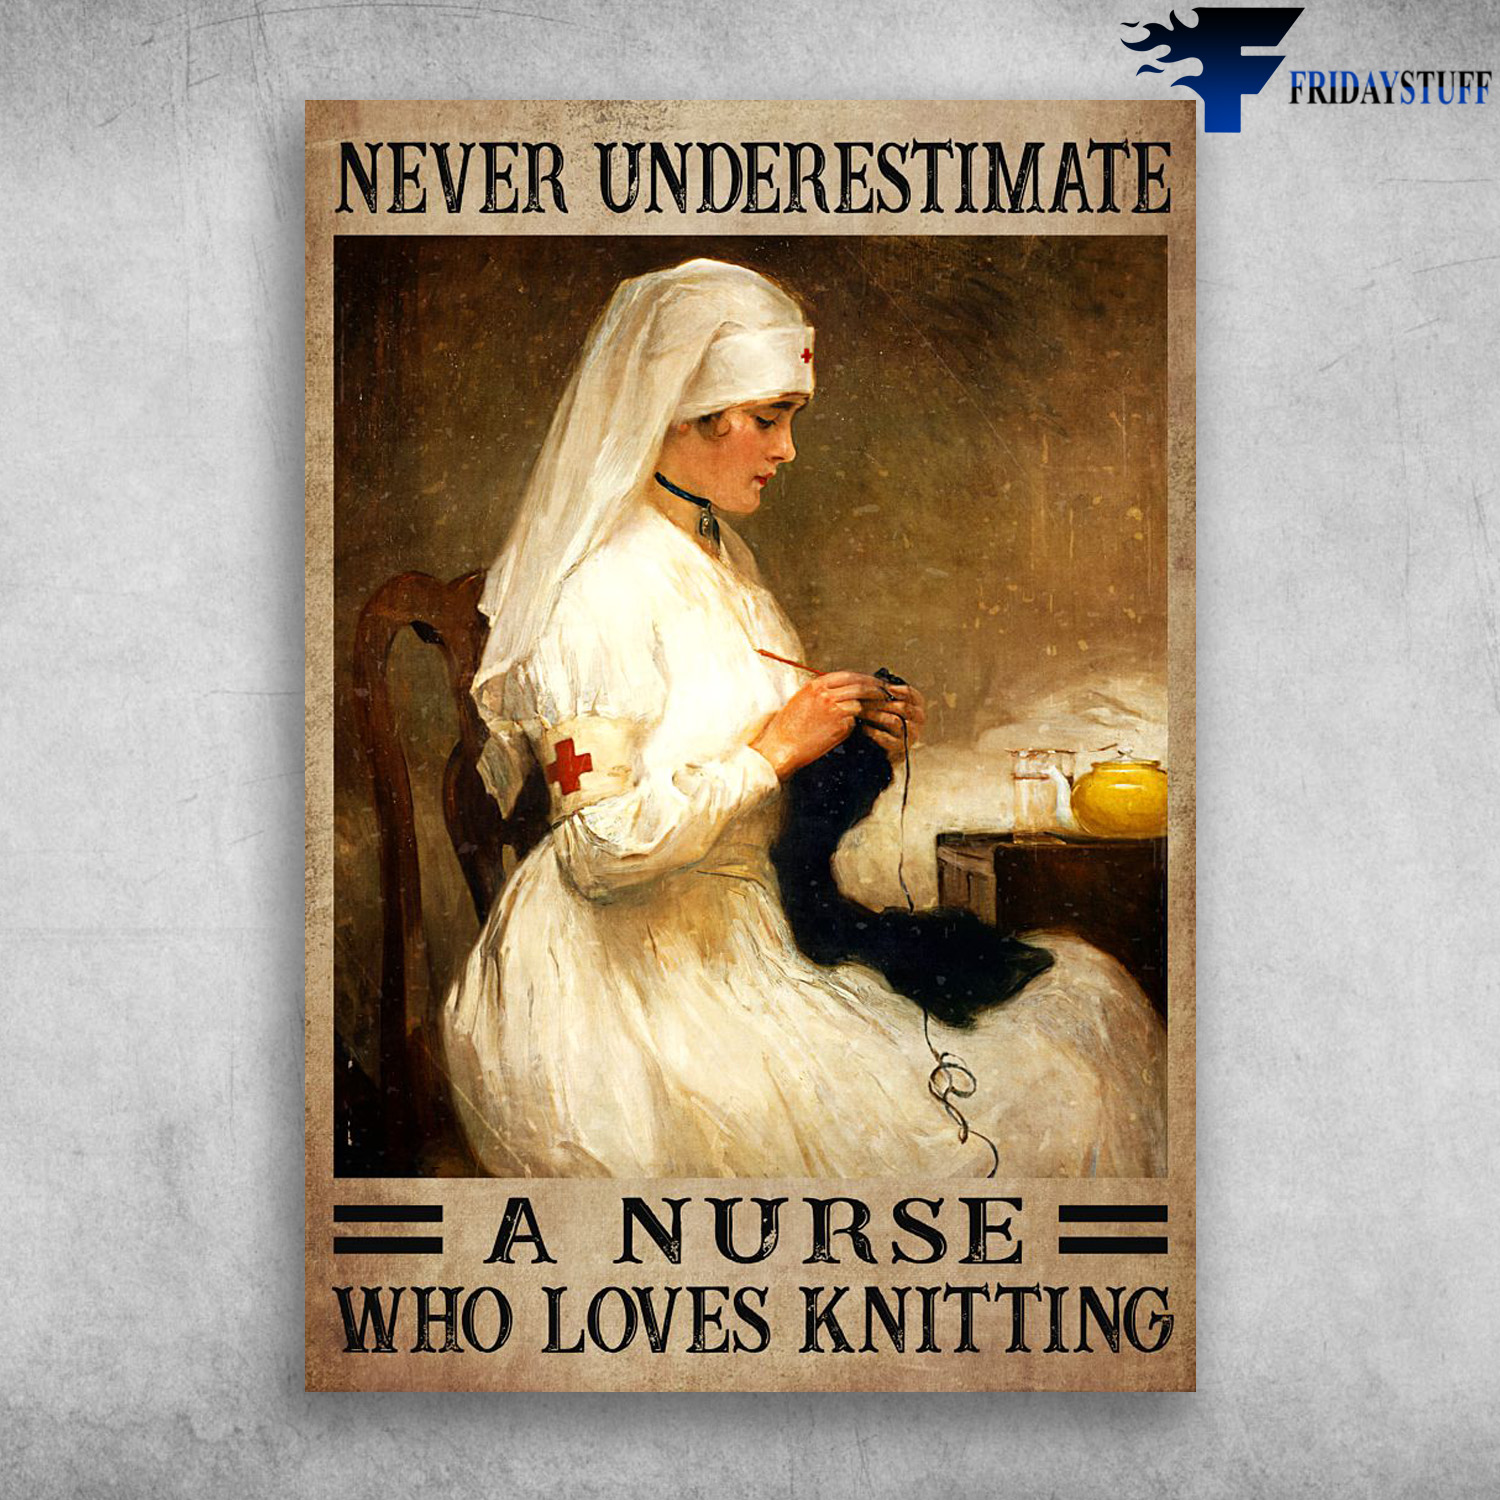 Nurse Knitting - Never Underestimate, A Nurse, Who Loves Knitting